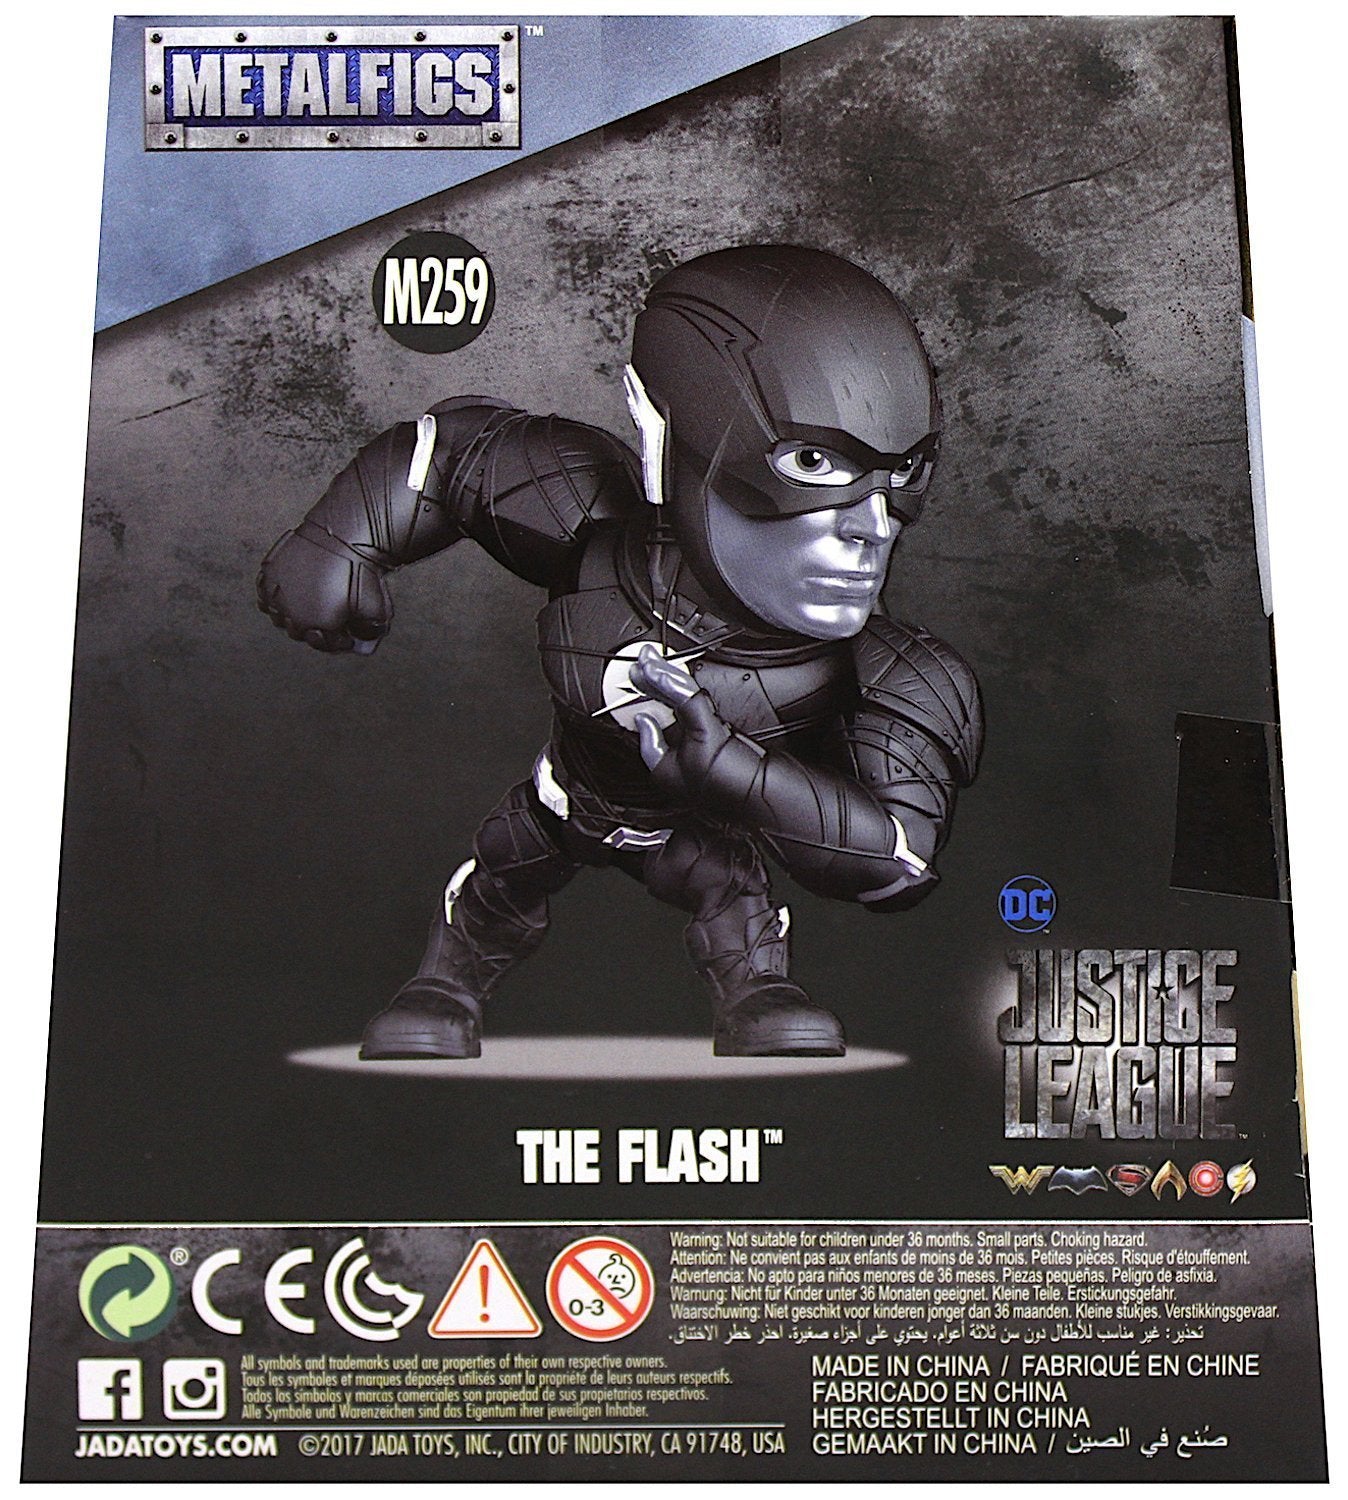 DC Justice League The Flash Diecast Metalfigs 4 Inch Figure - Nerd Arena